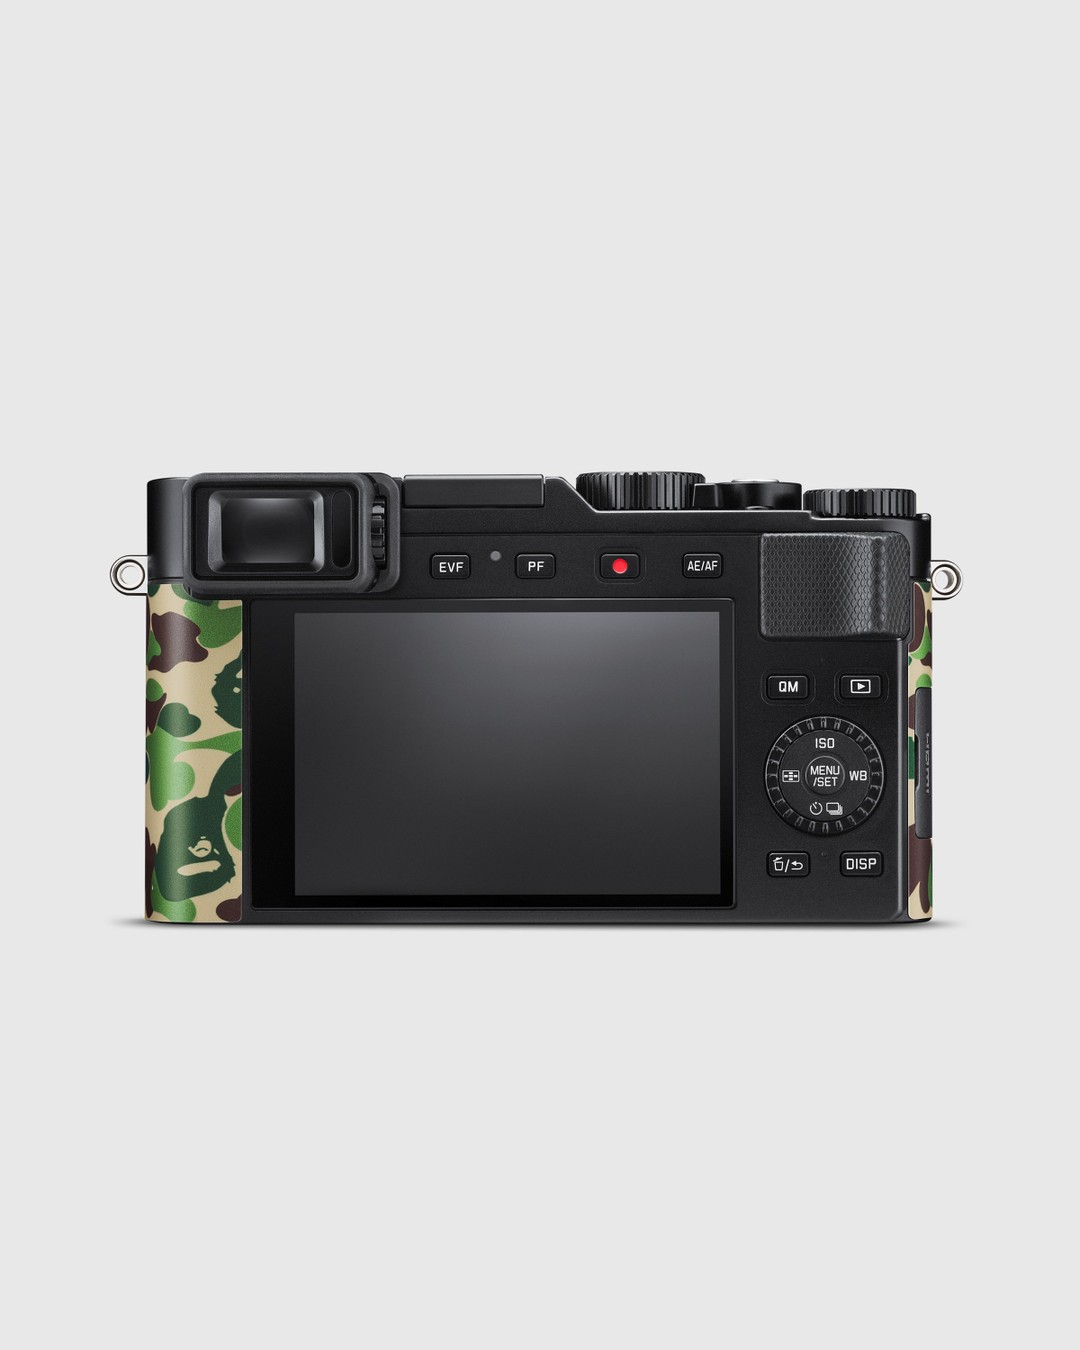 Leica – D-Lux 7 “A BATHING APE® x STASH” Edition Black - Cameras & Accessories - Multi - Image 2